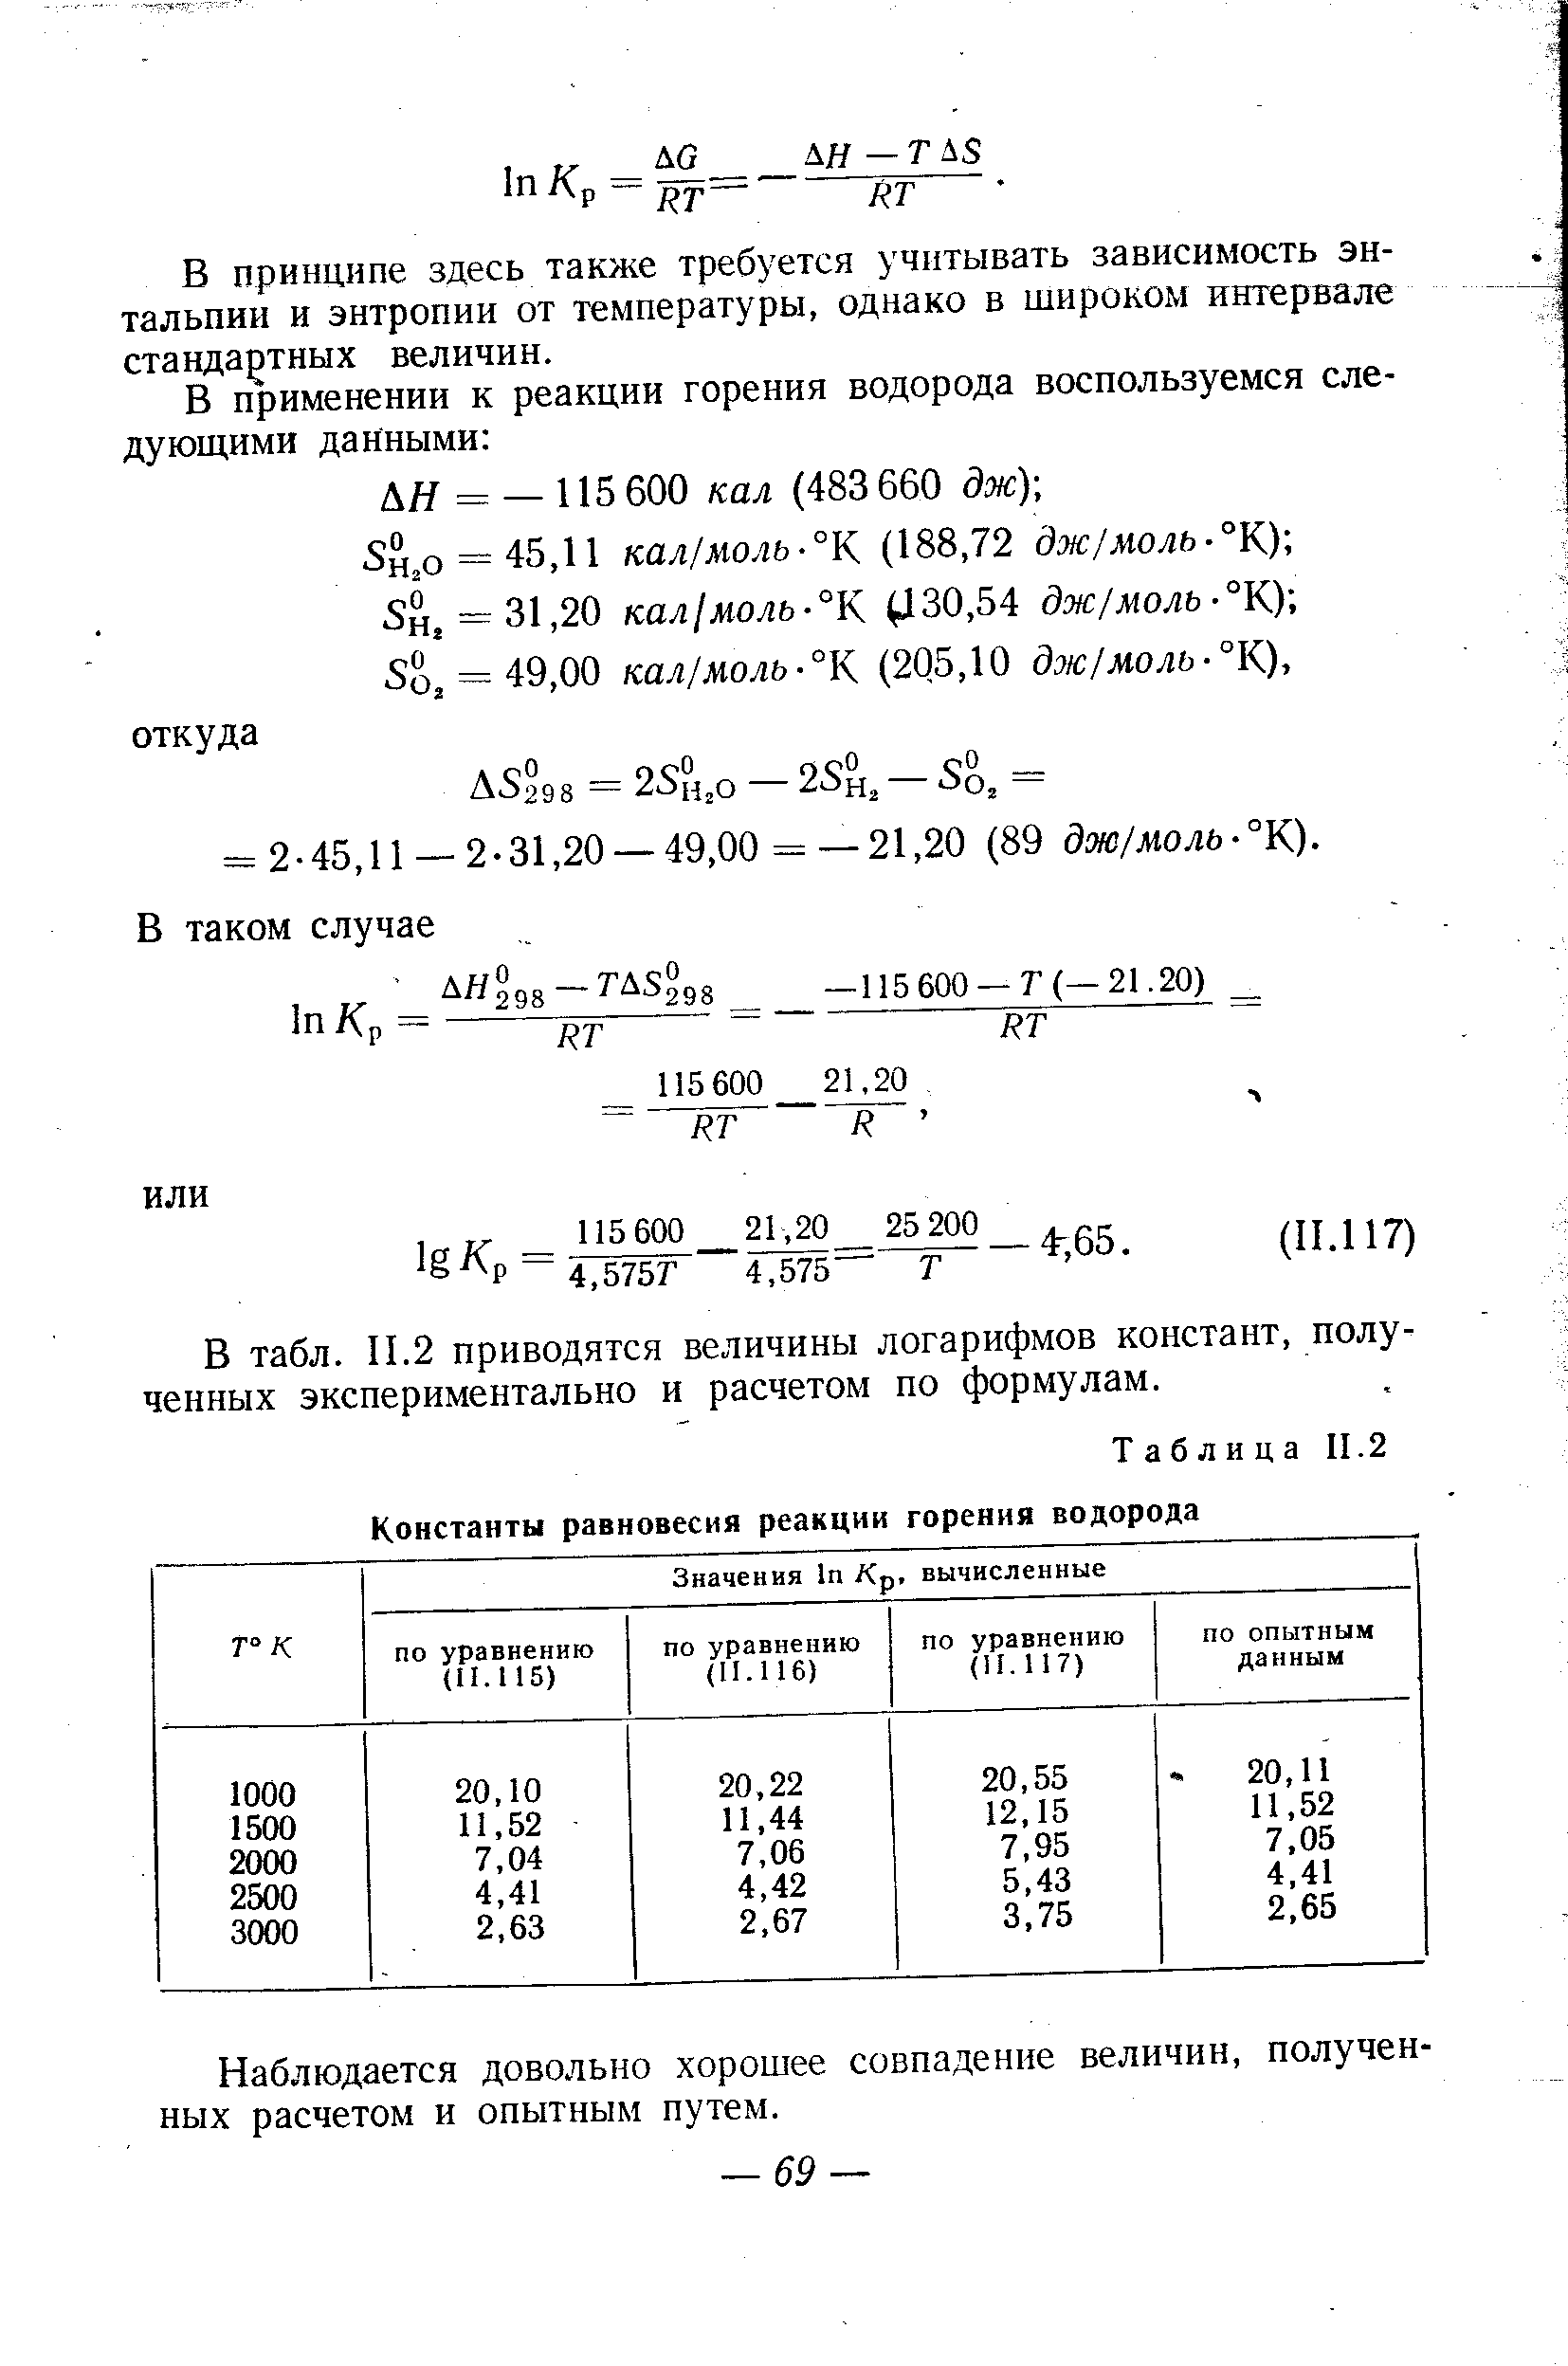 Таблица 11,2 <a href="/info/211215">Константы равновесия реакции</a> горения водорода
